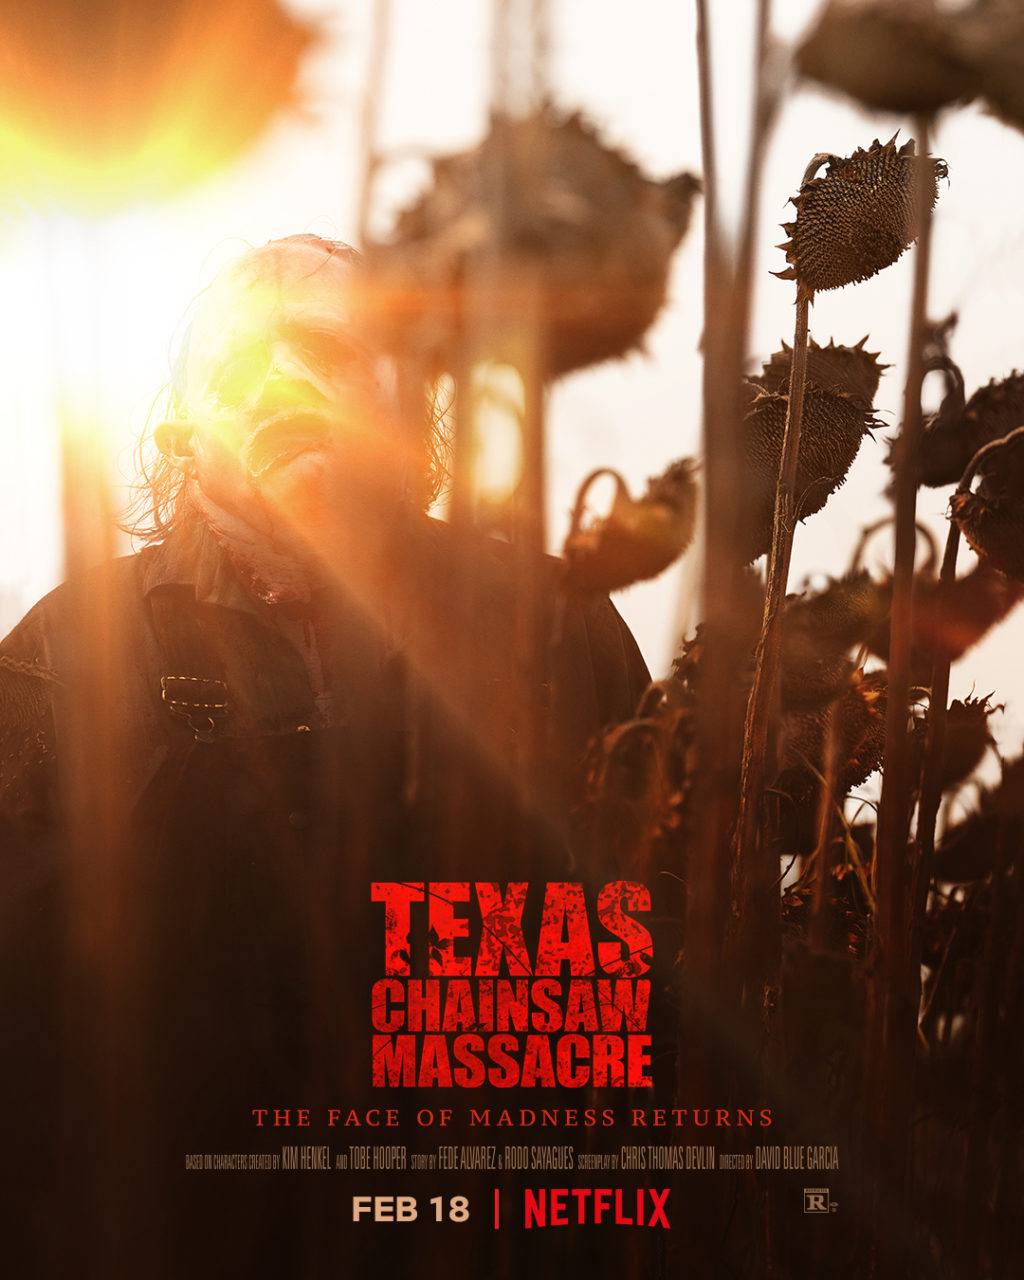 Texas Chainsaw Massacre poster (Netflix)